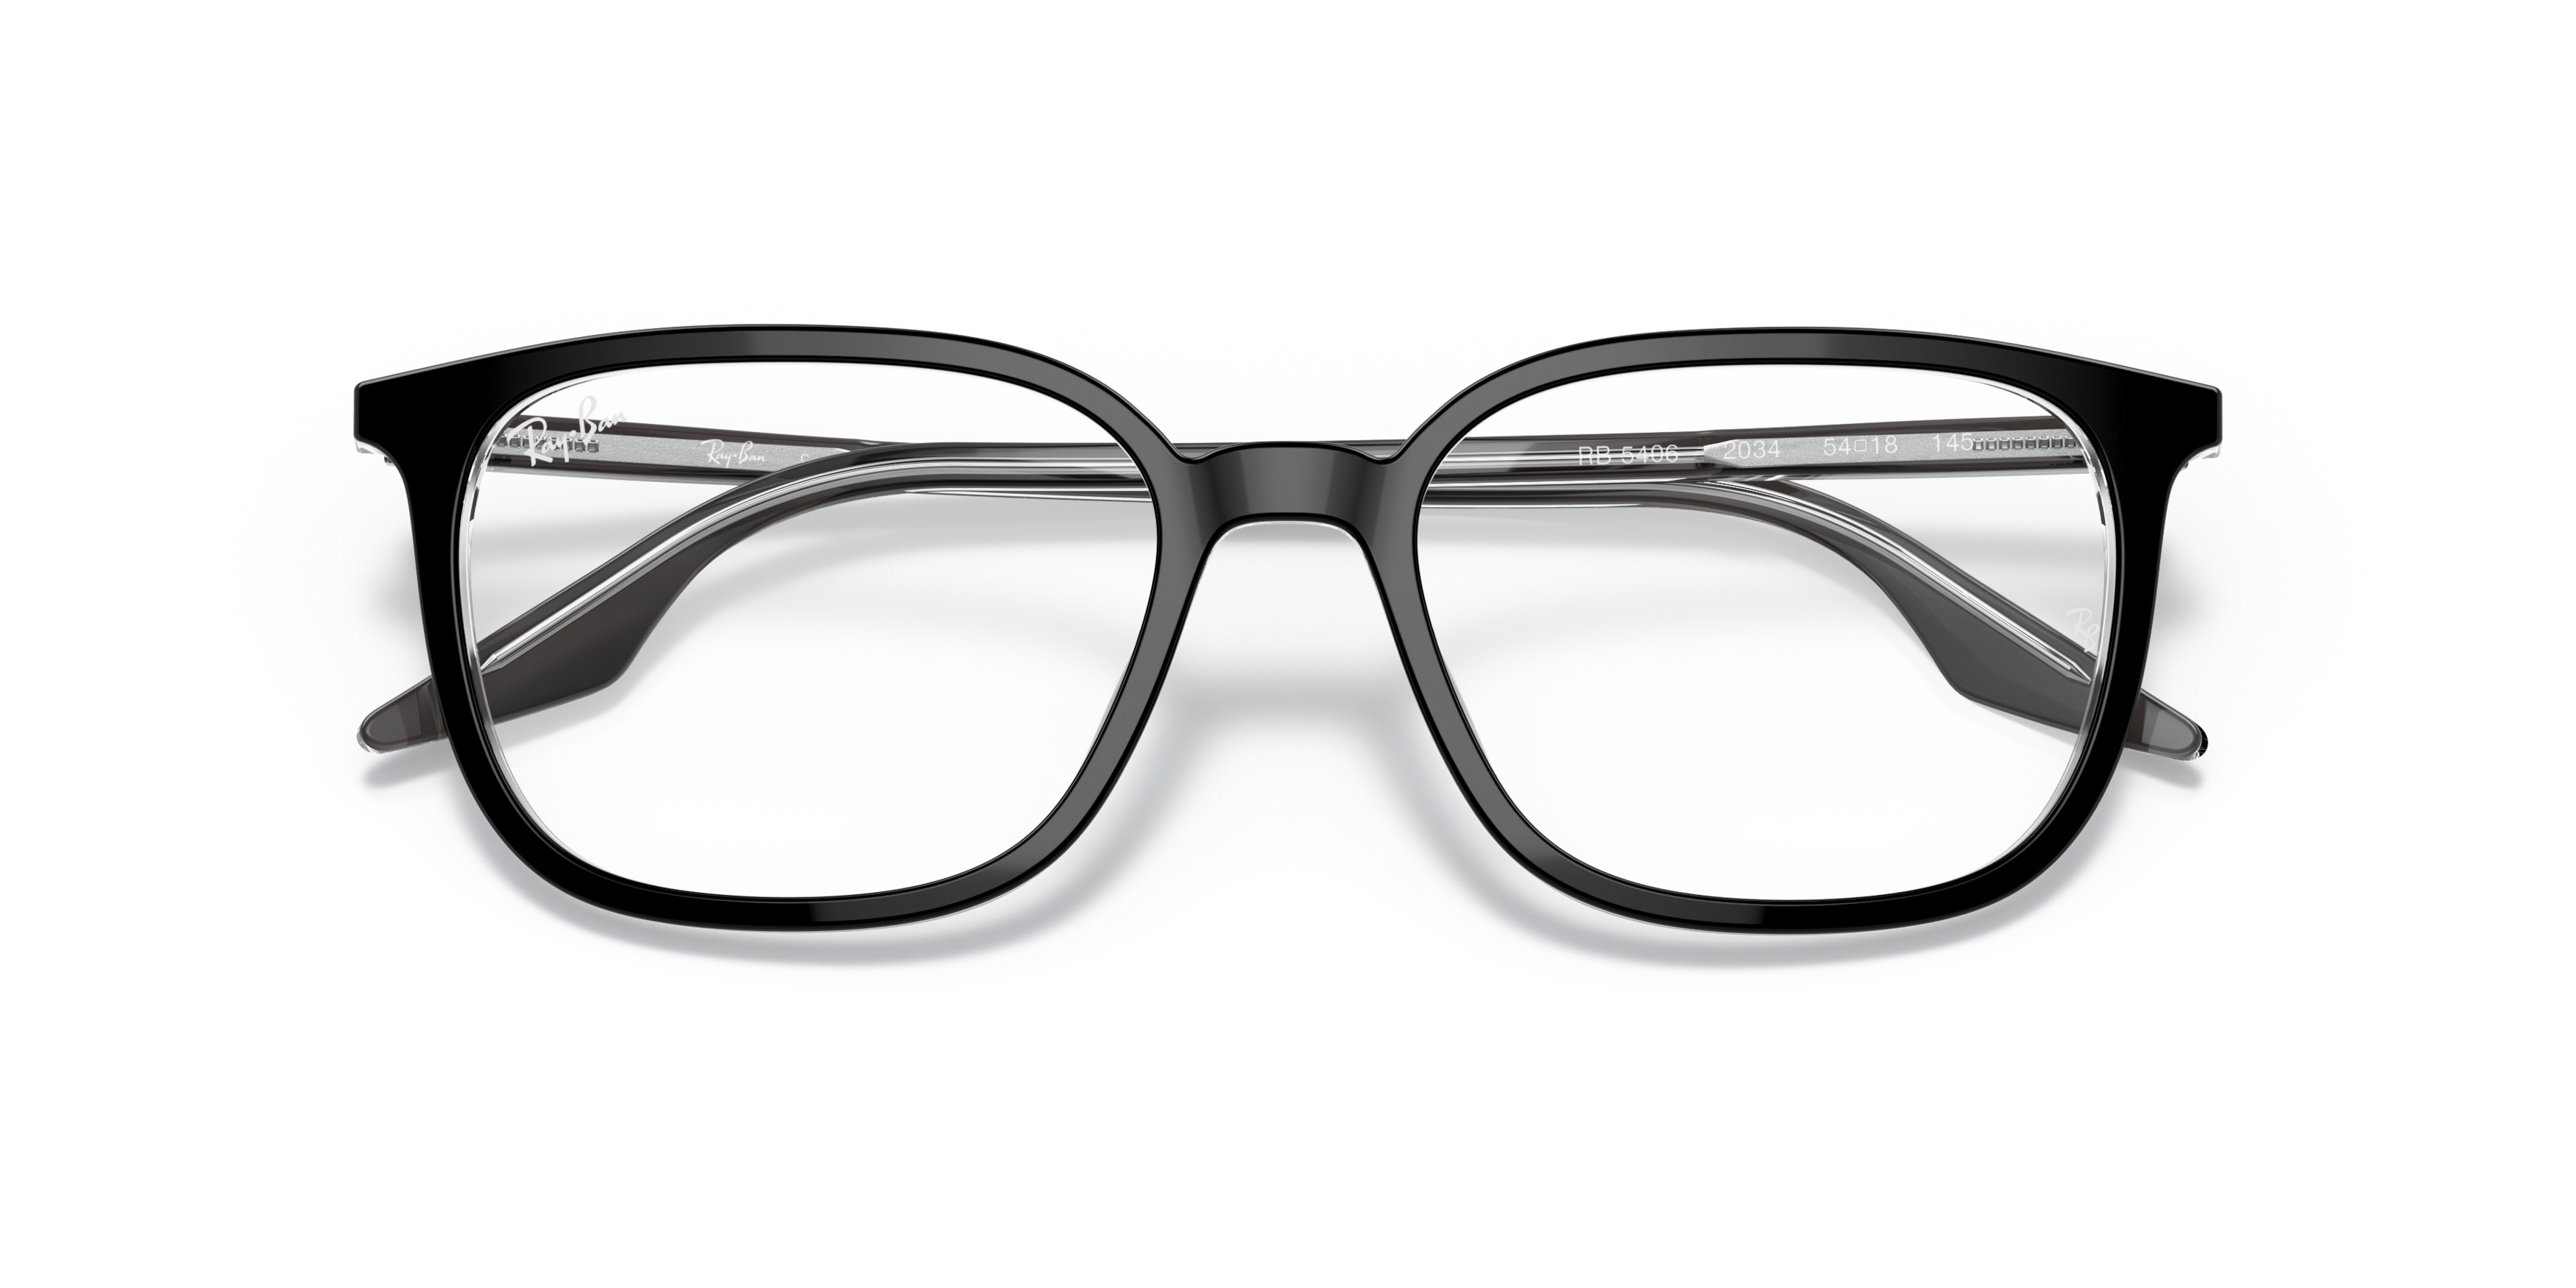 Folded Ray-Ban RX 5406 (2034) Glasses Transparent / Black